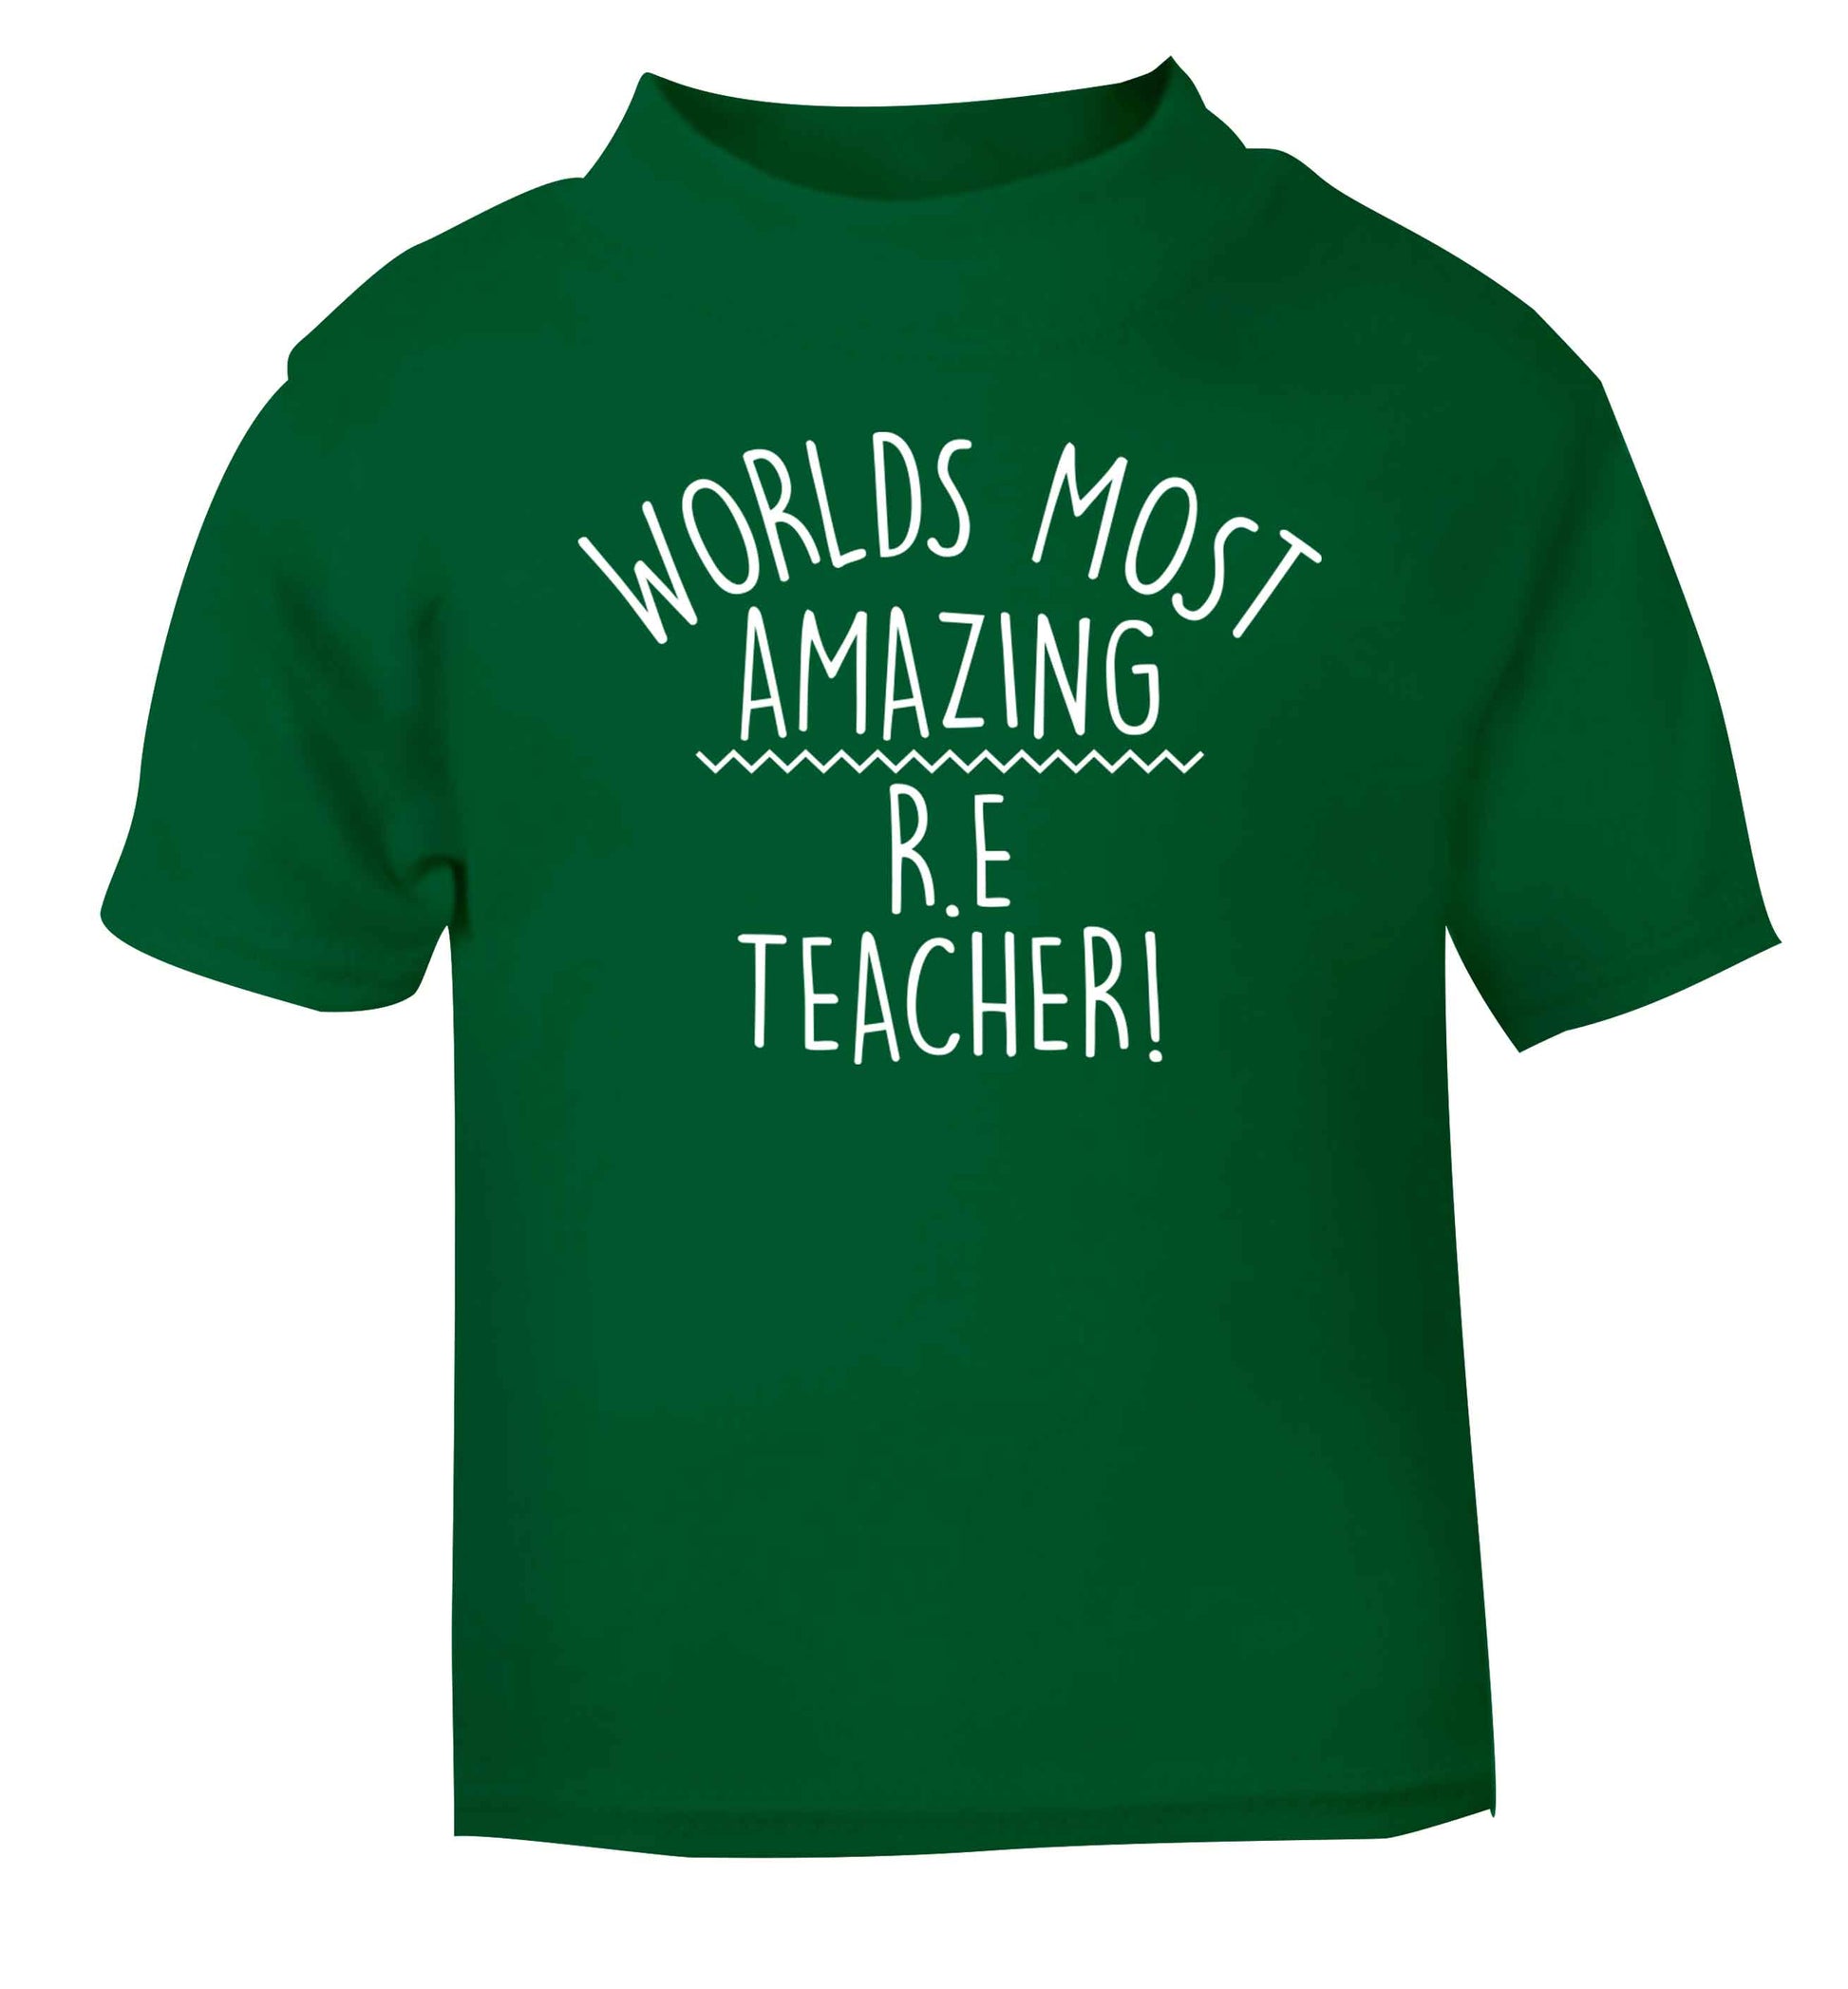 Worlds most amazing R.E teacher green baby toddler Tshirt 2 Years